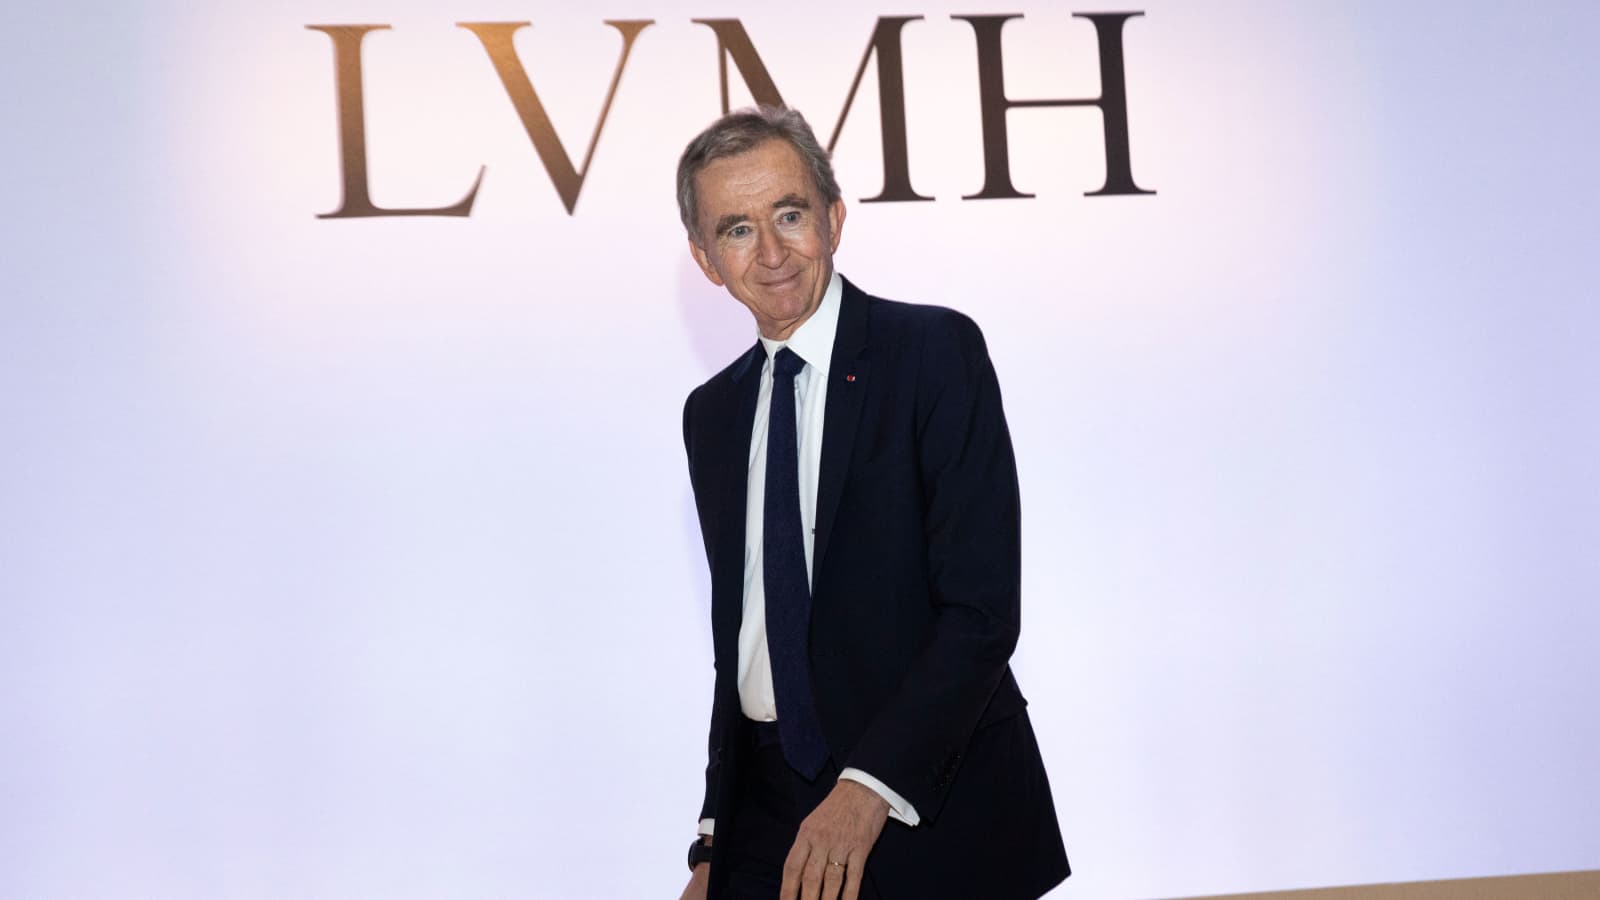 Bernard Arnault Net Worth: How Much Is The Louis Vuitton CEO Worth?